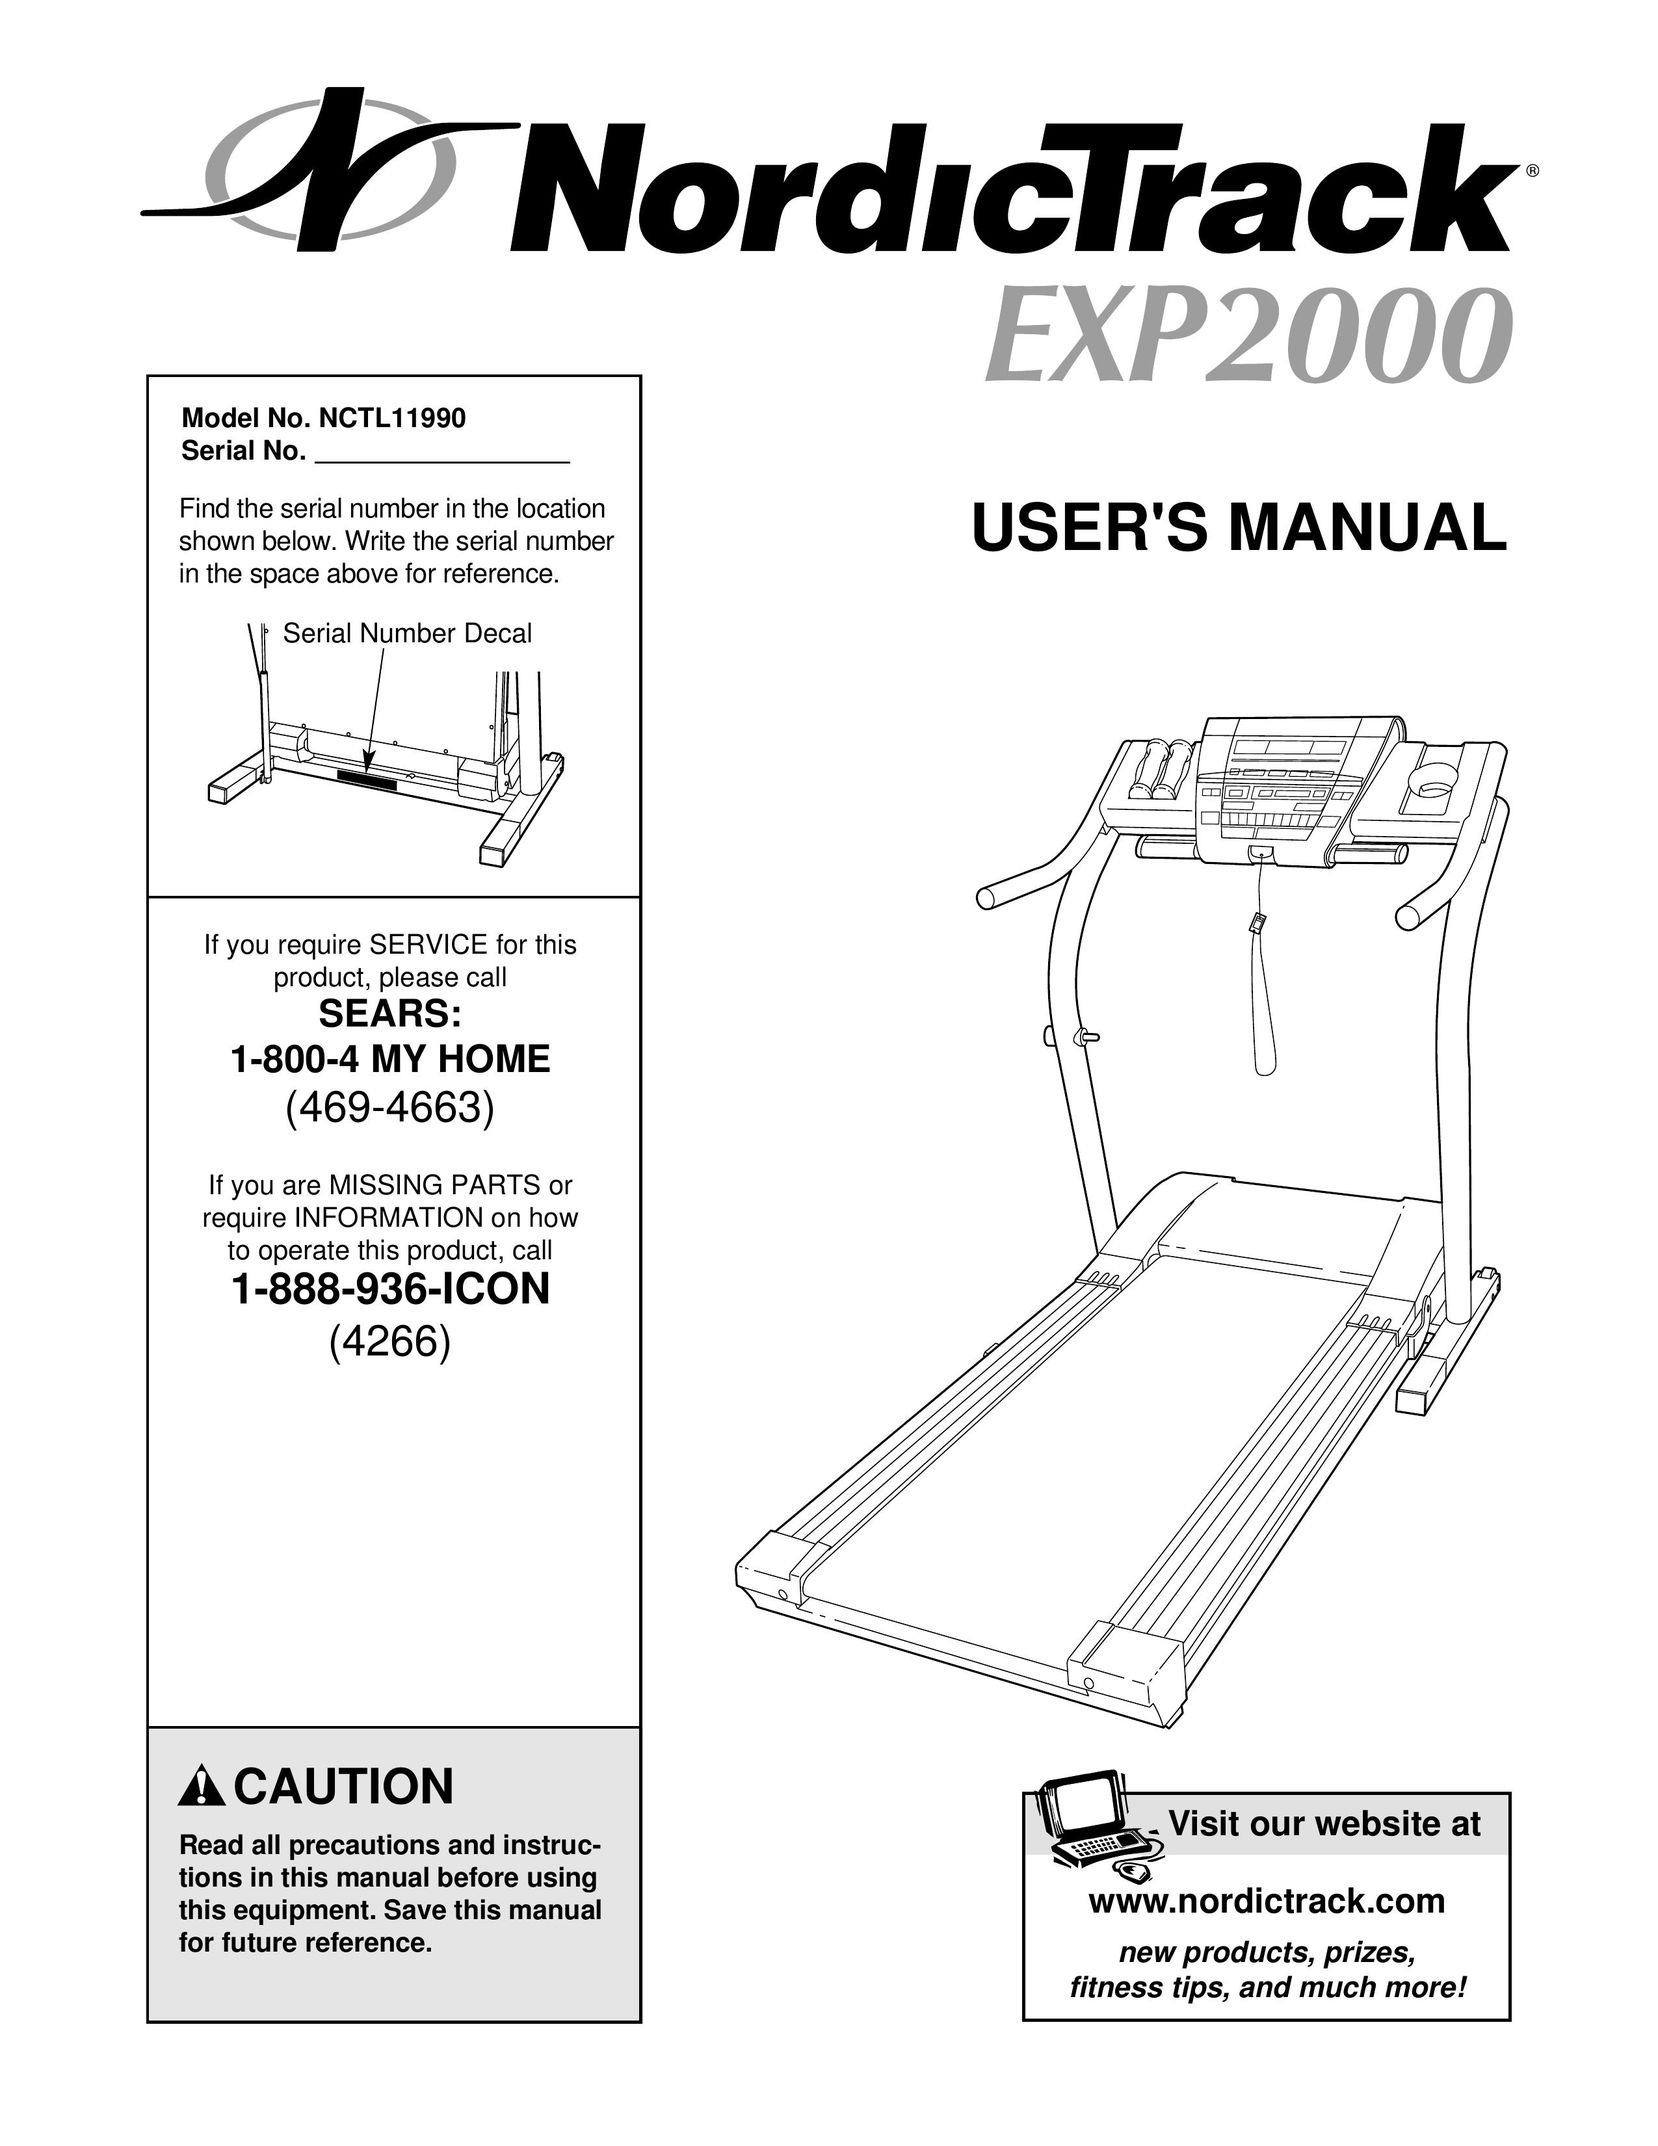 NordicTrack NCTL11990 Treadmill User Manual